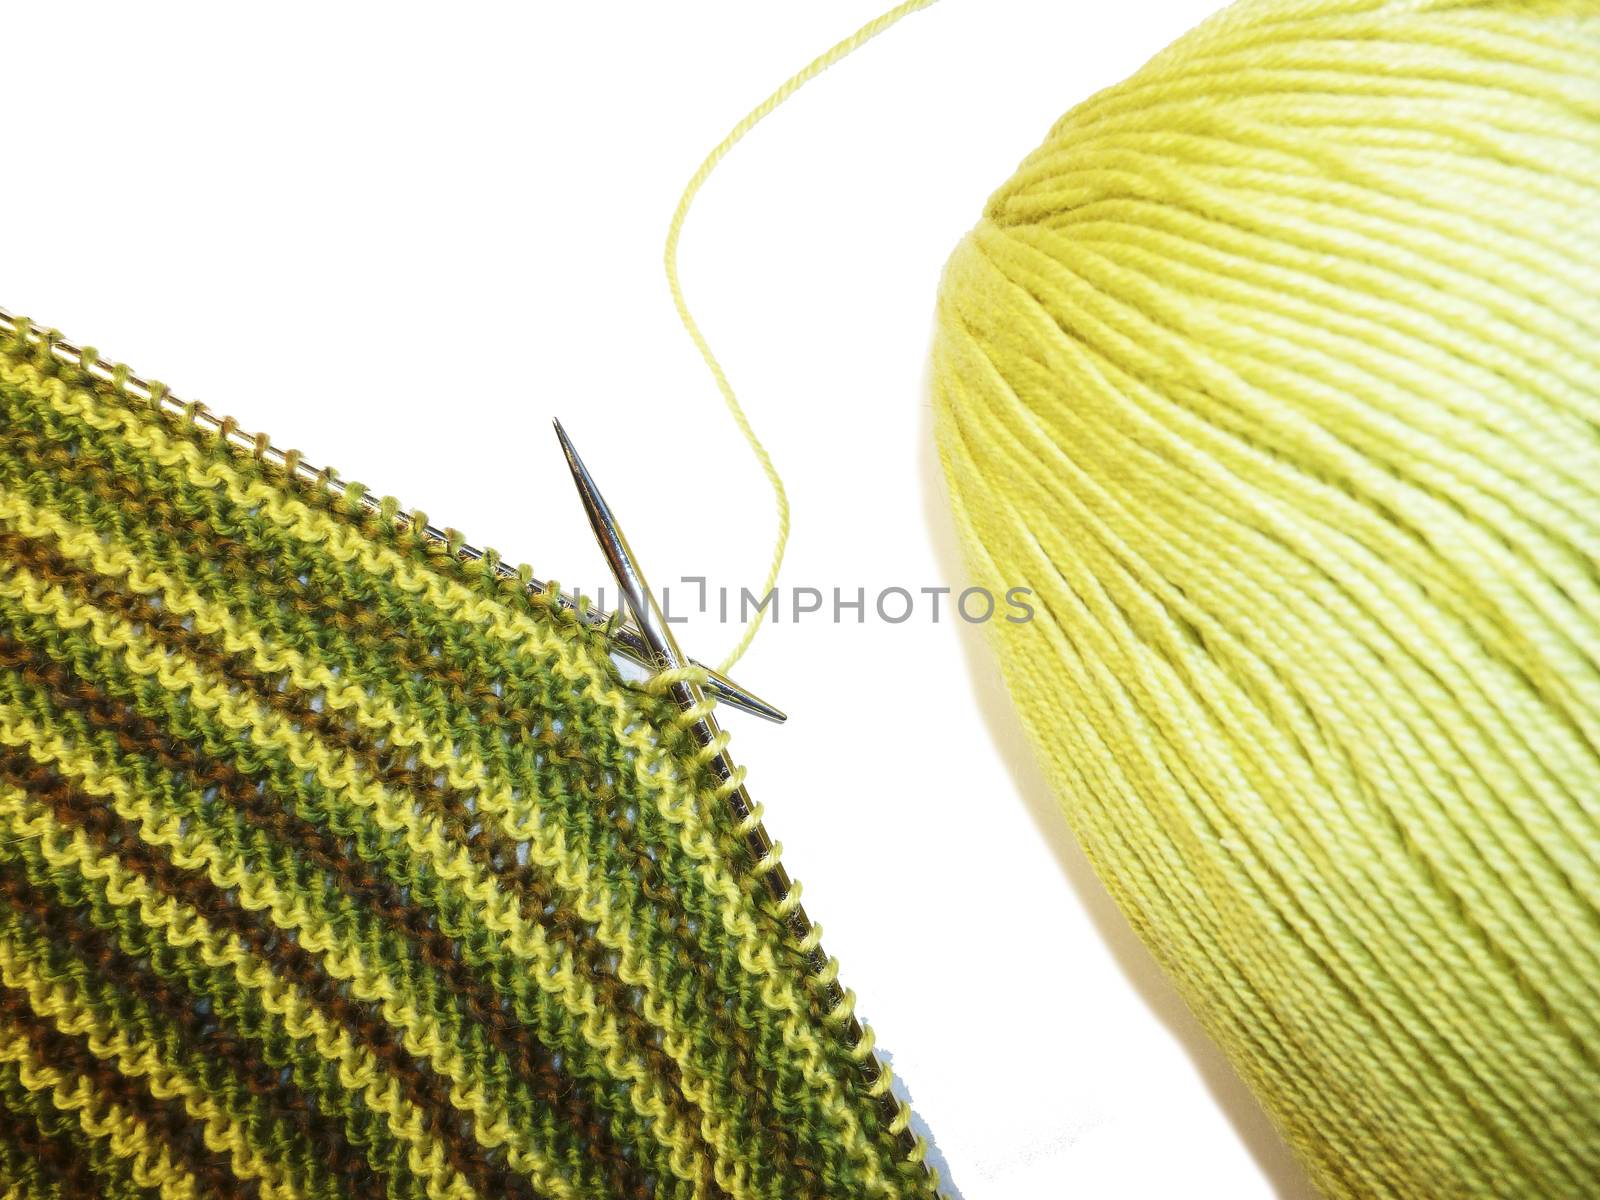 Knitting. Knitted fabric and knitting needles. Work process. Hobbies, crafts. by Julia_Faranchuk